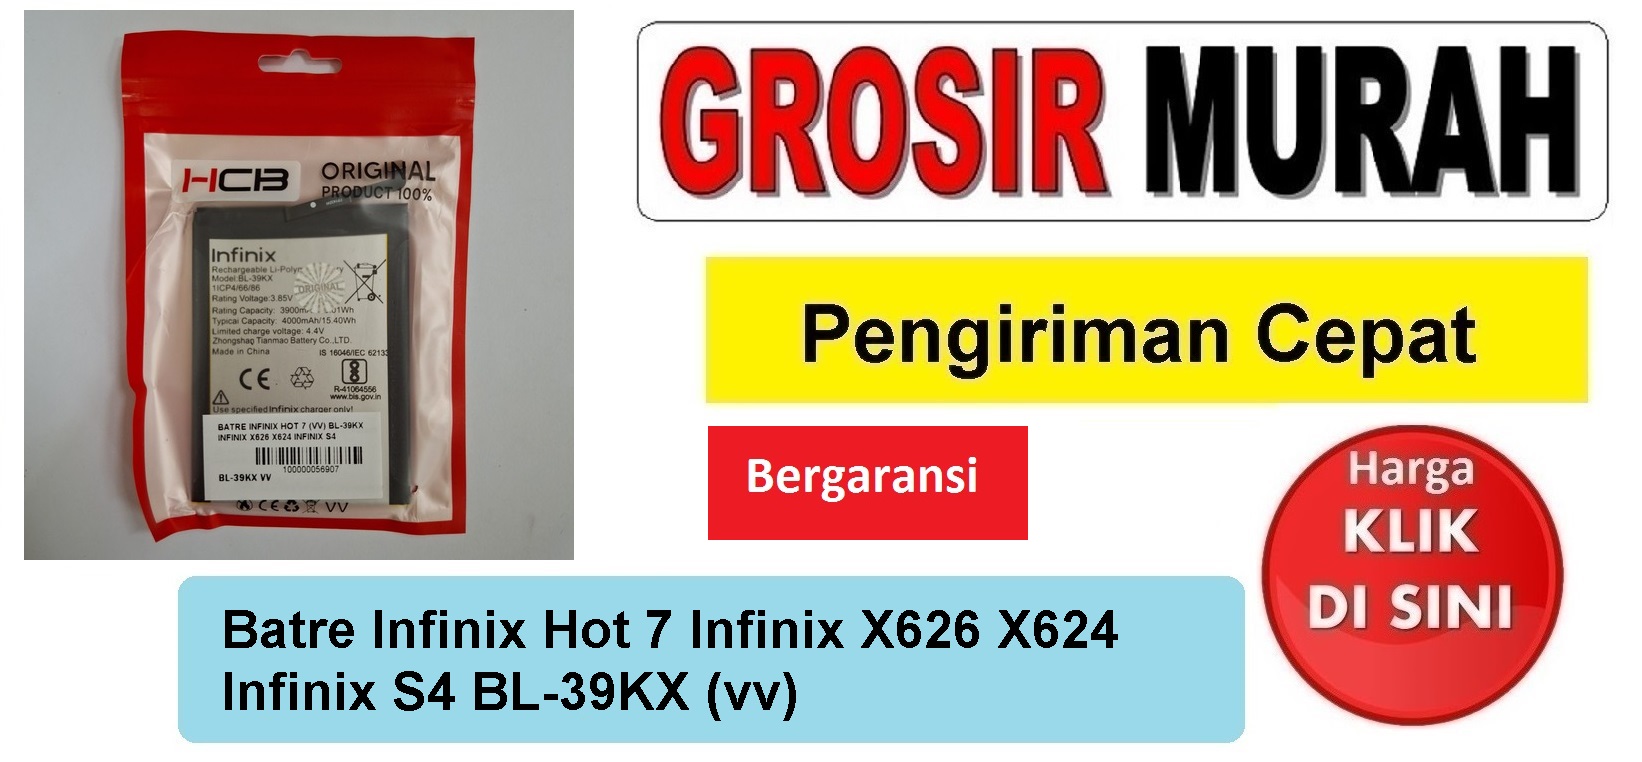 Batre Infinix Hot 7 (Vv) Bl-39Kx Infinix X626 X624 Infinix S4 Baterai Battery Bergaransi Batere